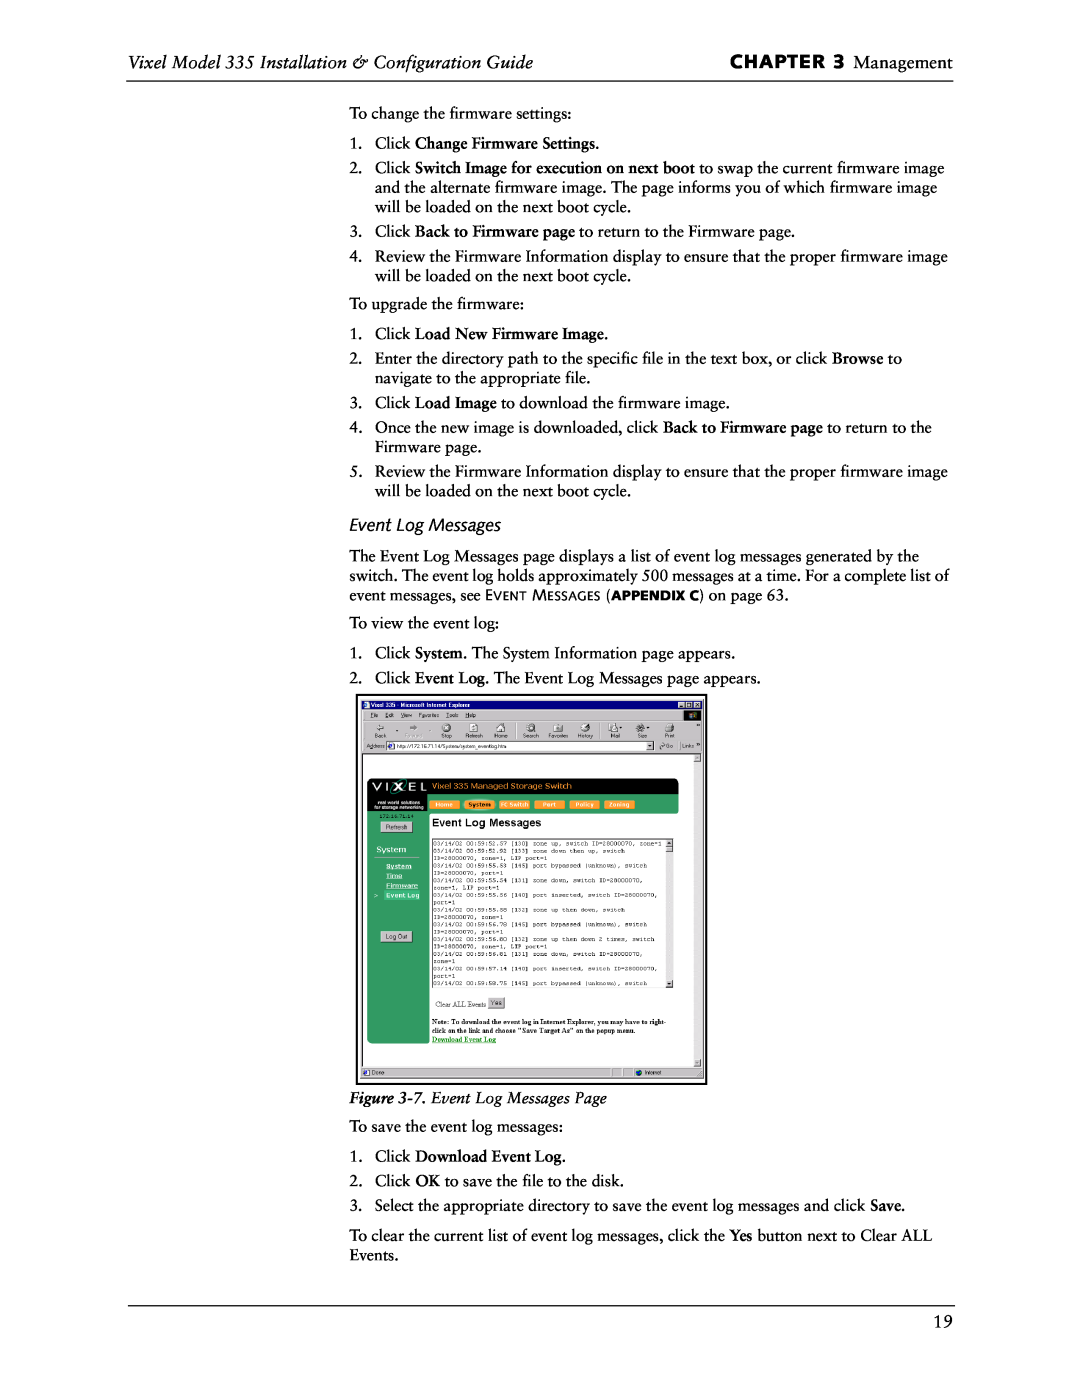 Vixel Management, Vixel Model 335 Installation & Configuration Guide, Event Log Messages, Click Load New Firmware Image 